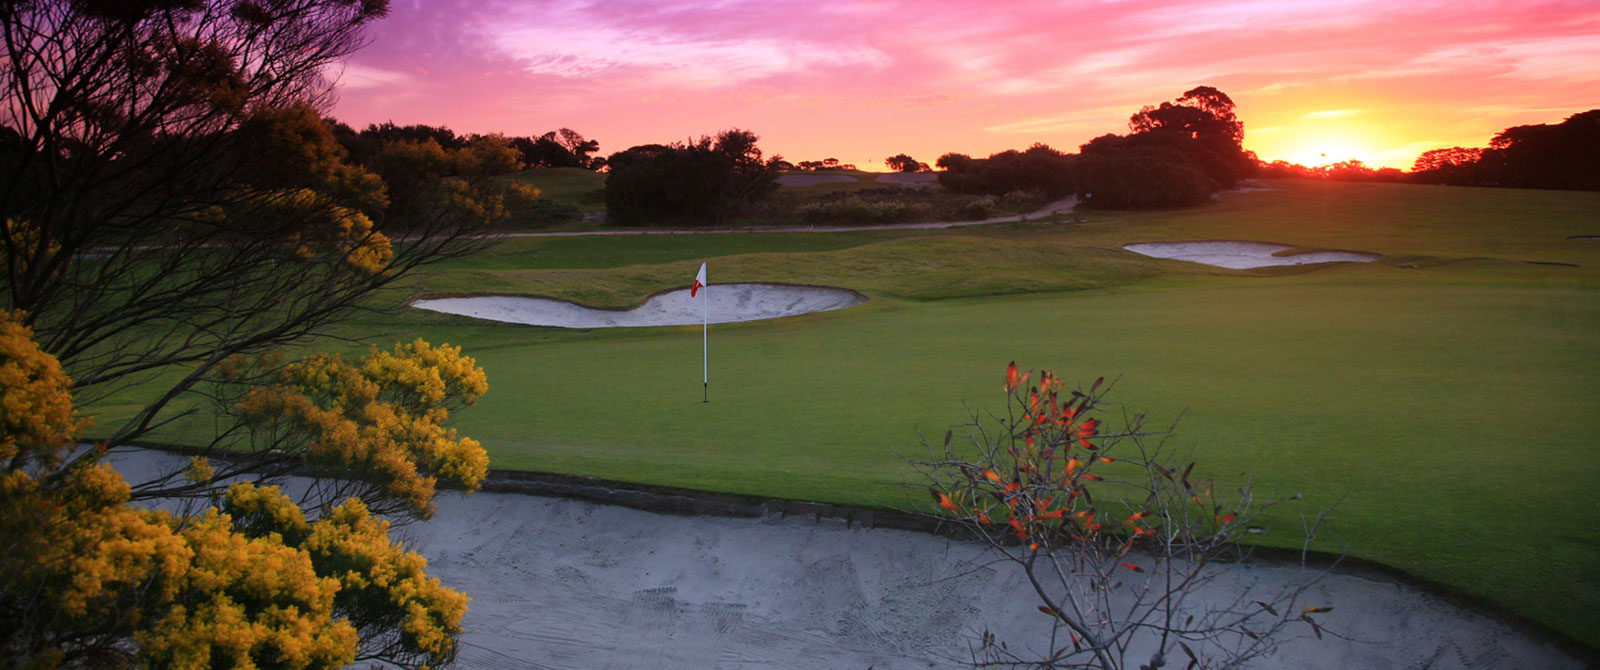 Sunset at Royal Melbourne Golf Club